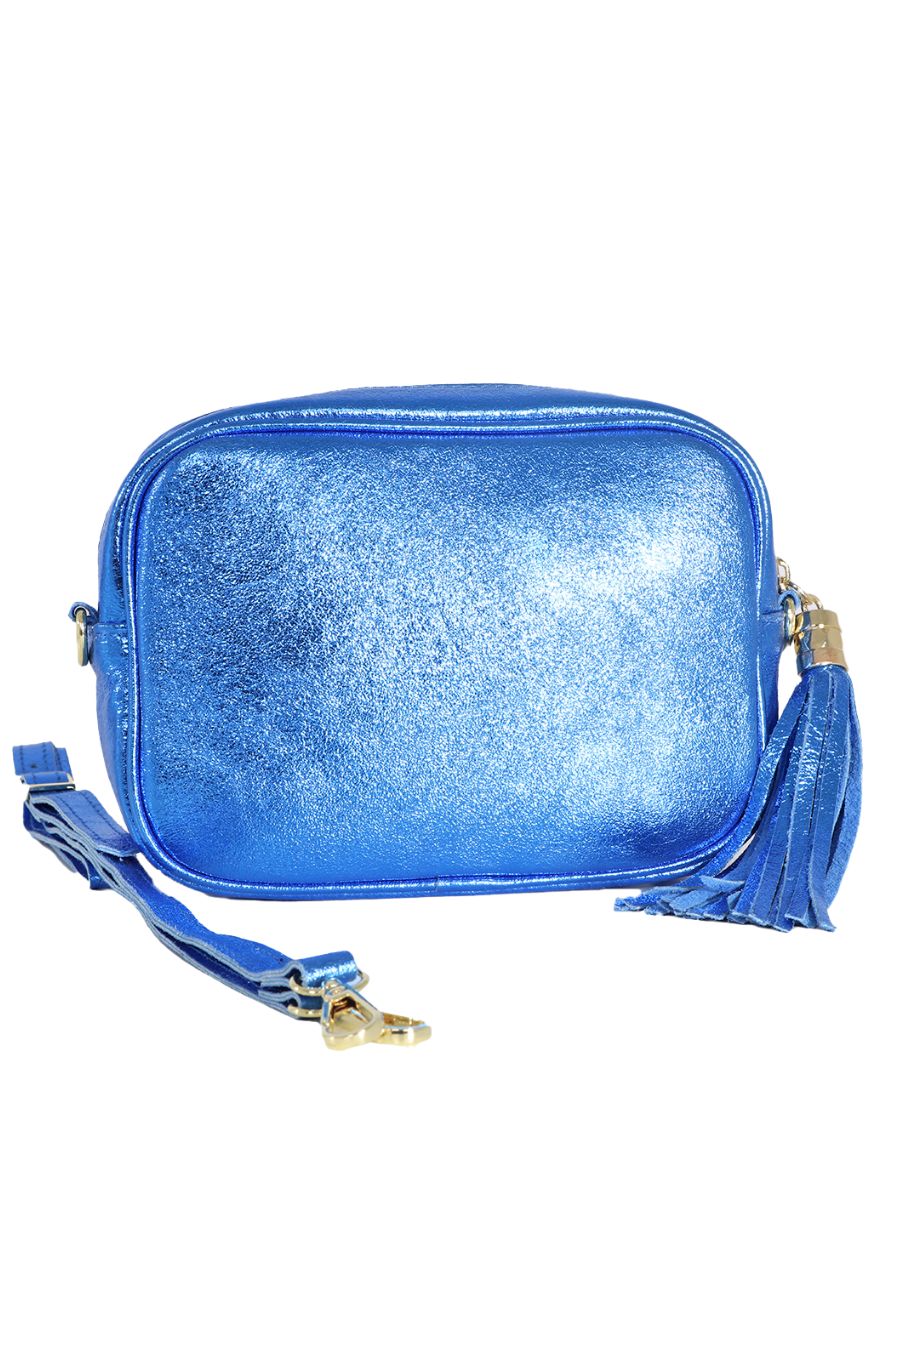 Metallic Blue Italian Leather Camera Bag